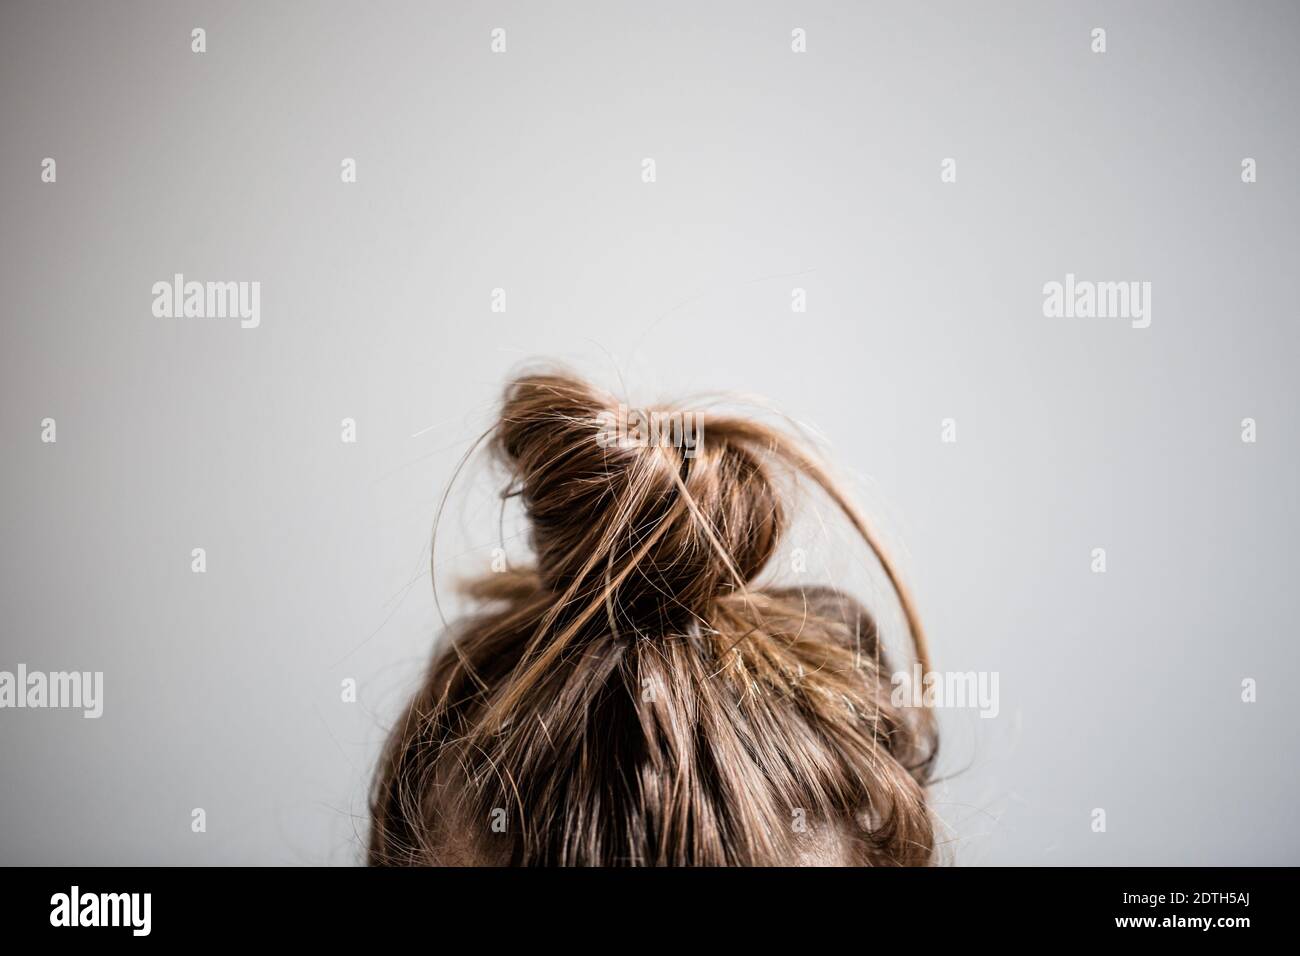 hair in messy bun Stock Photo